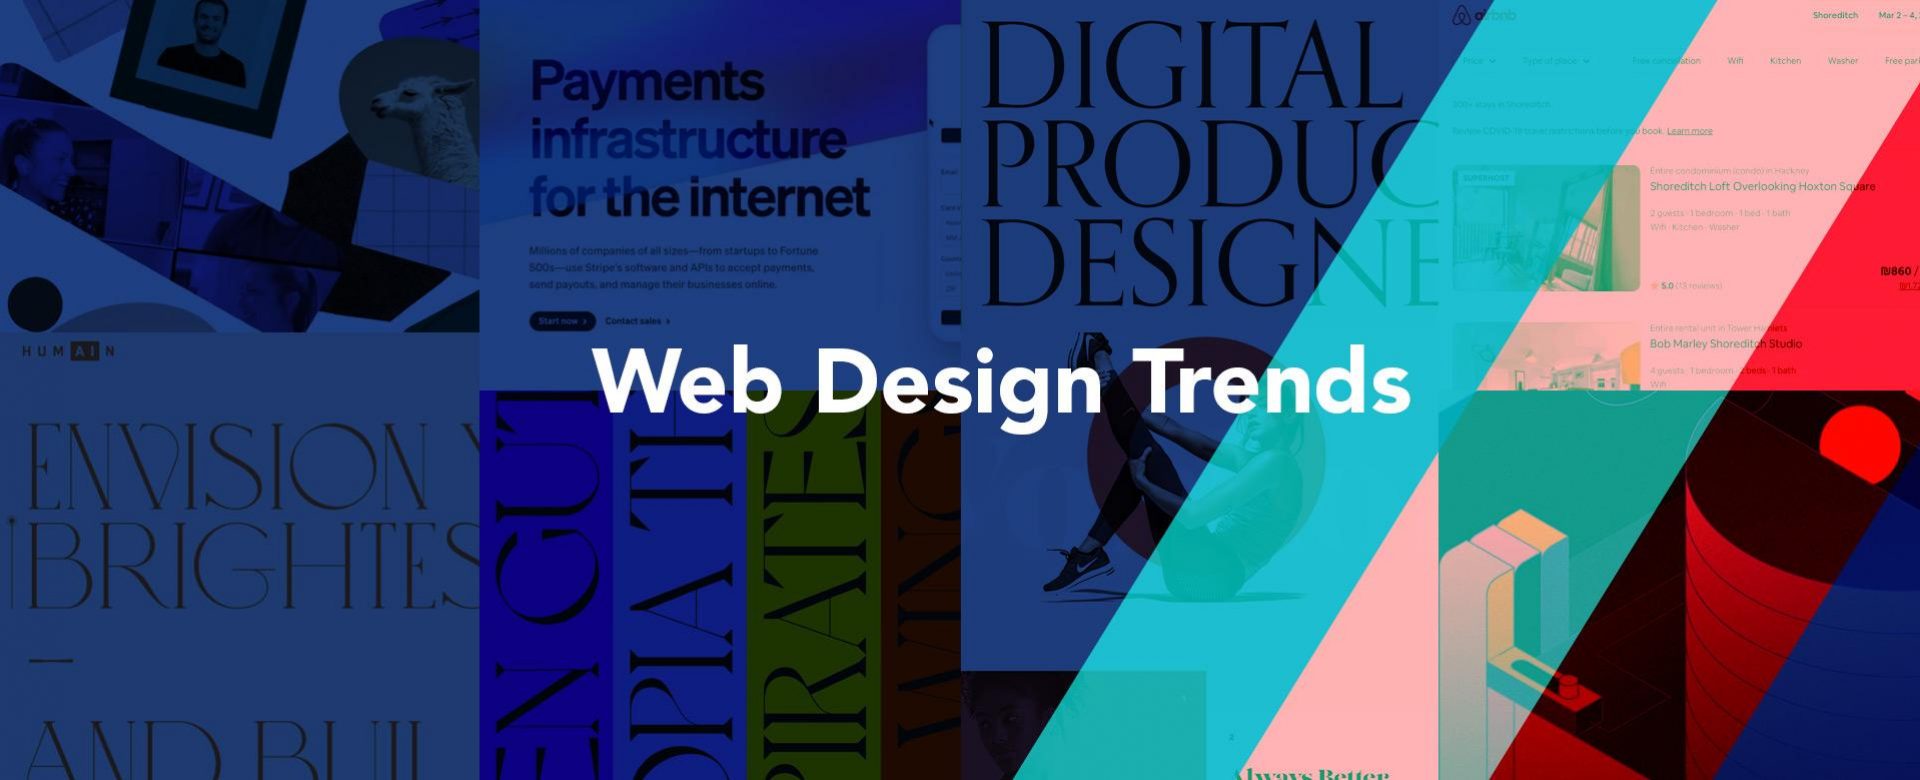 webdesign-trends-featuredimg